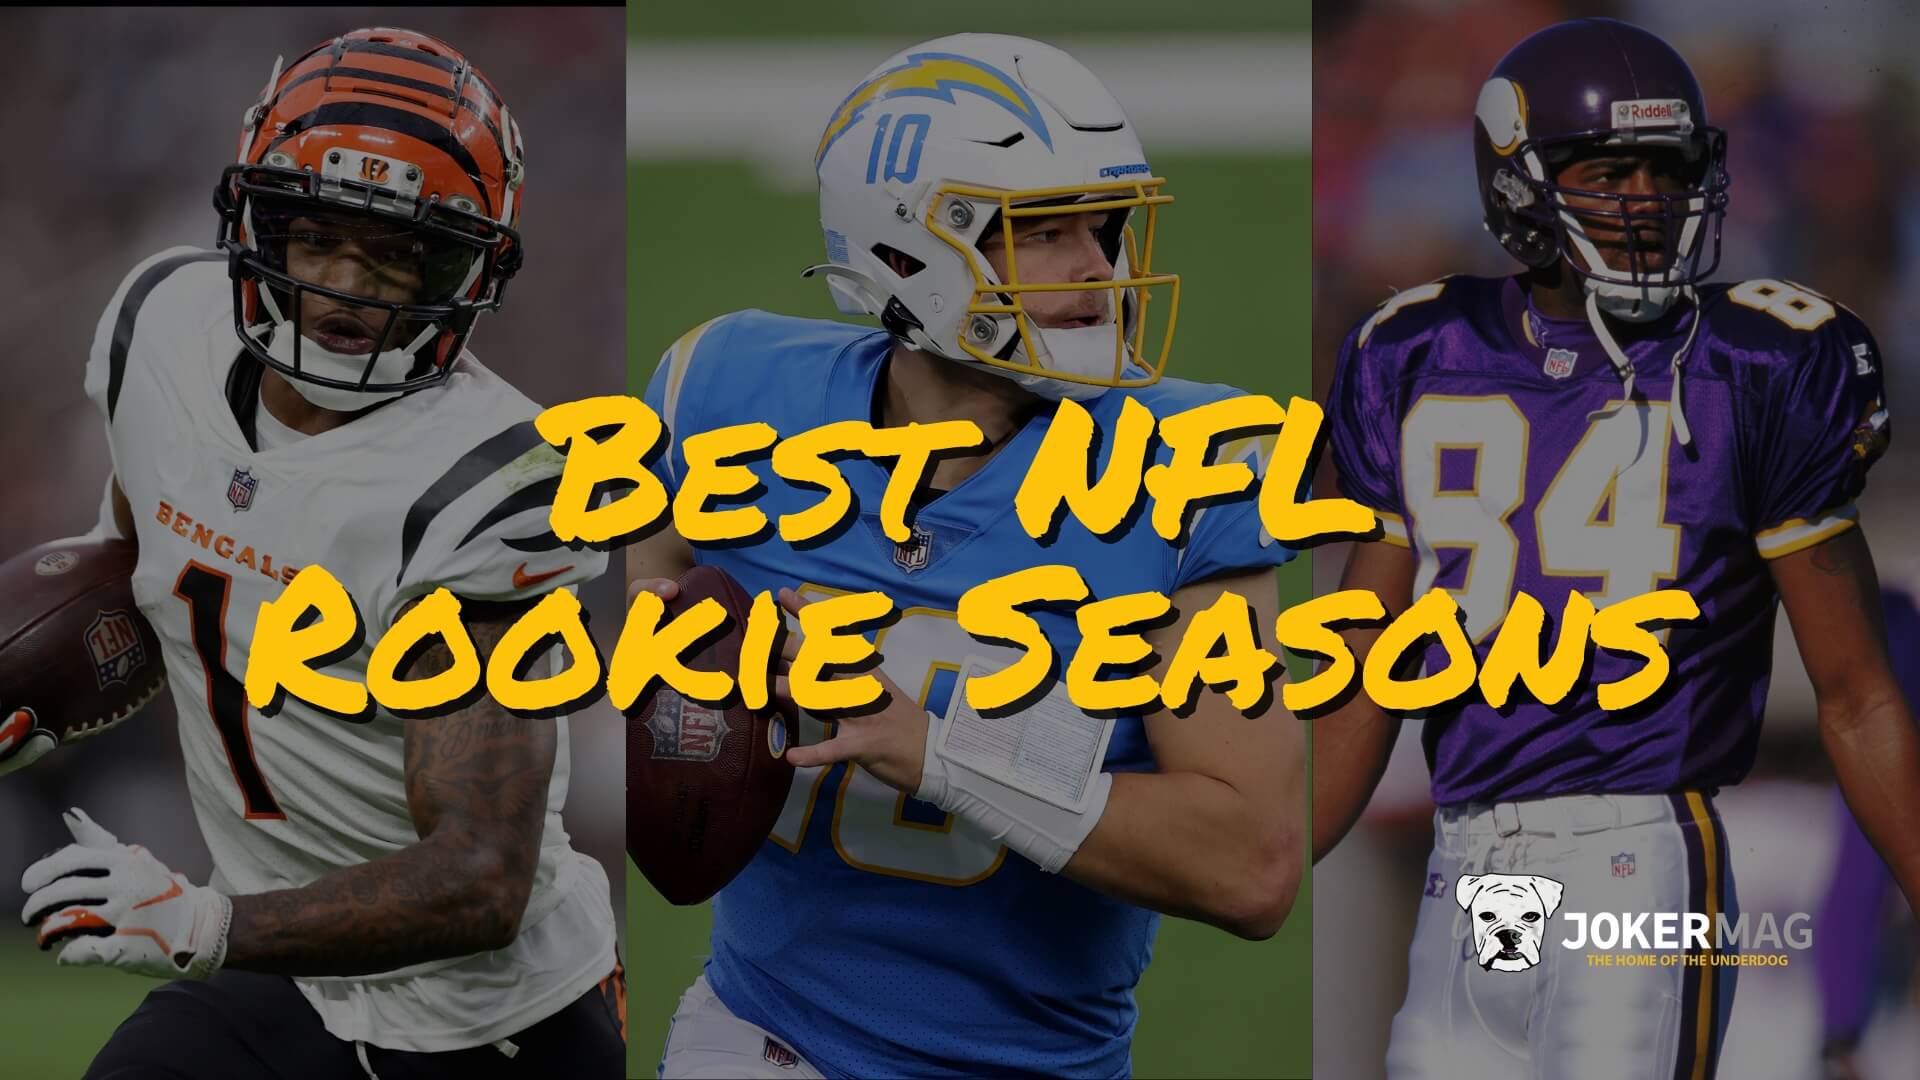 Ranking the best NFL rookie seasons in history